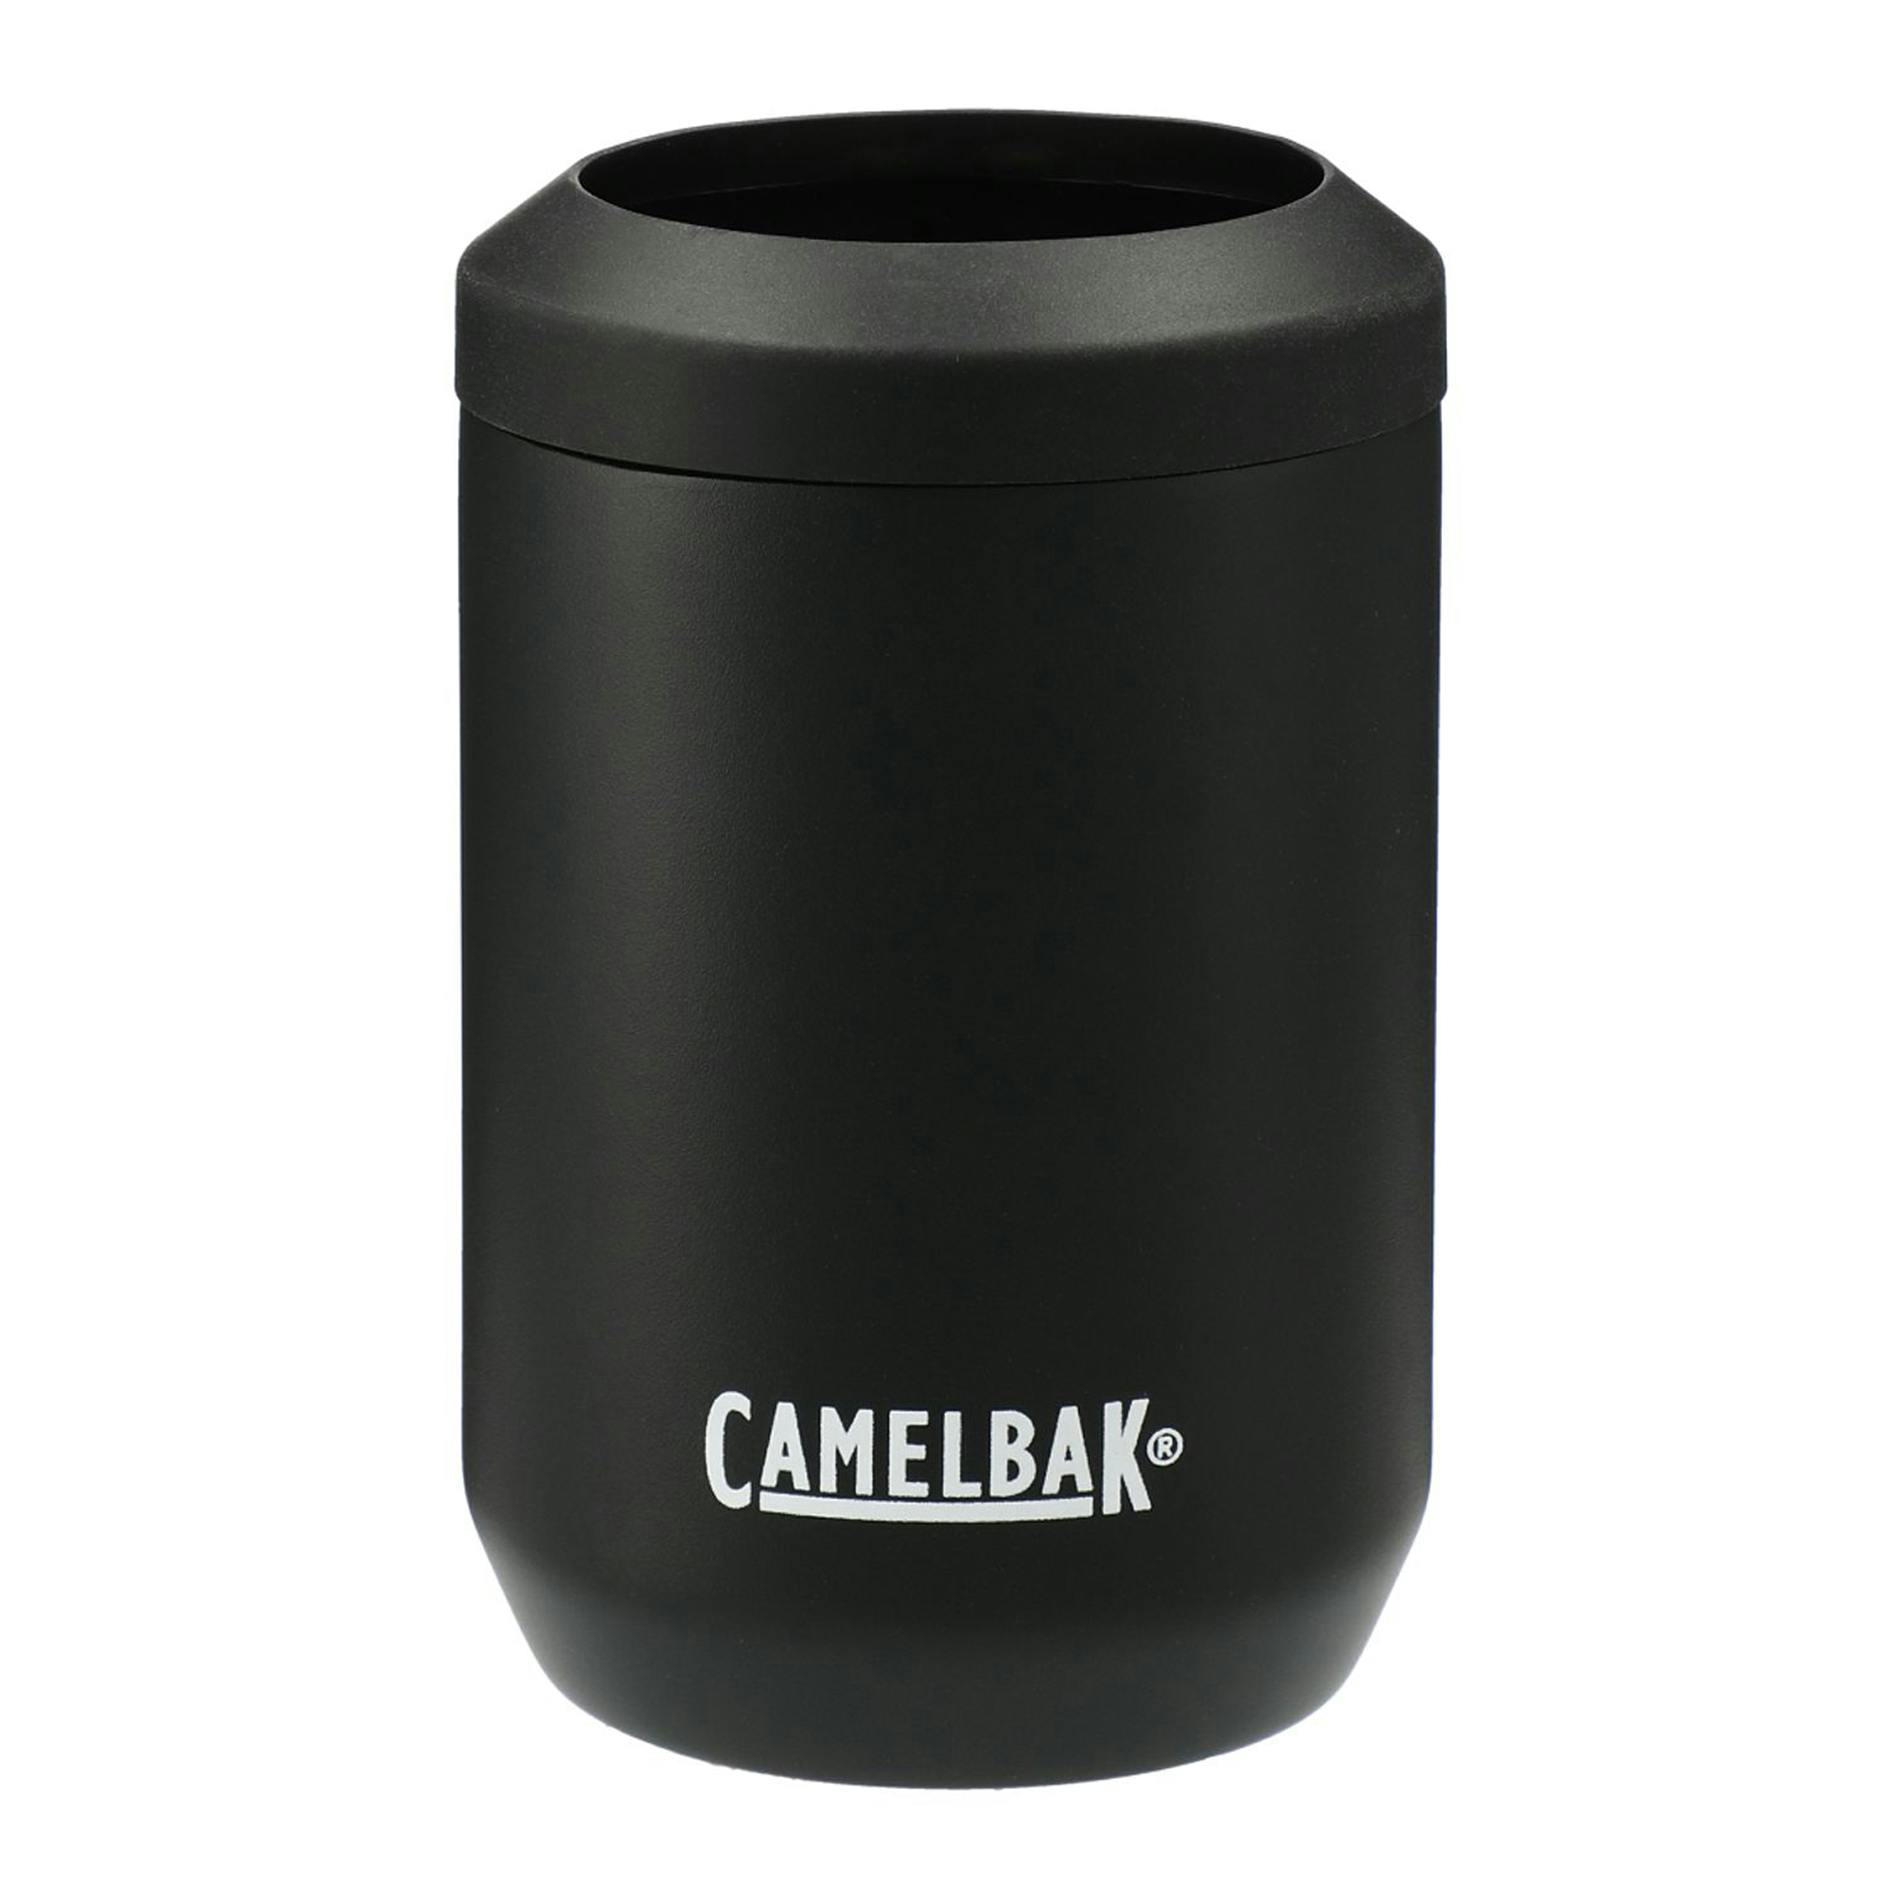 CamelBak Can cooler 12oz - additional Image 3